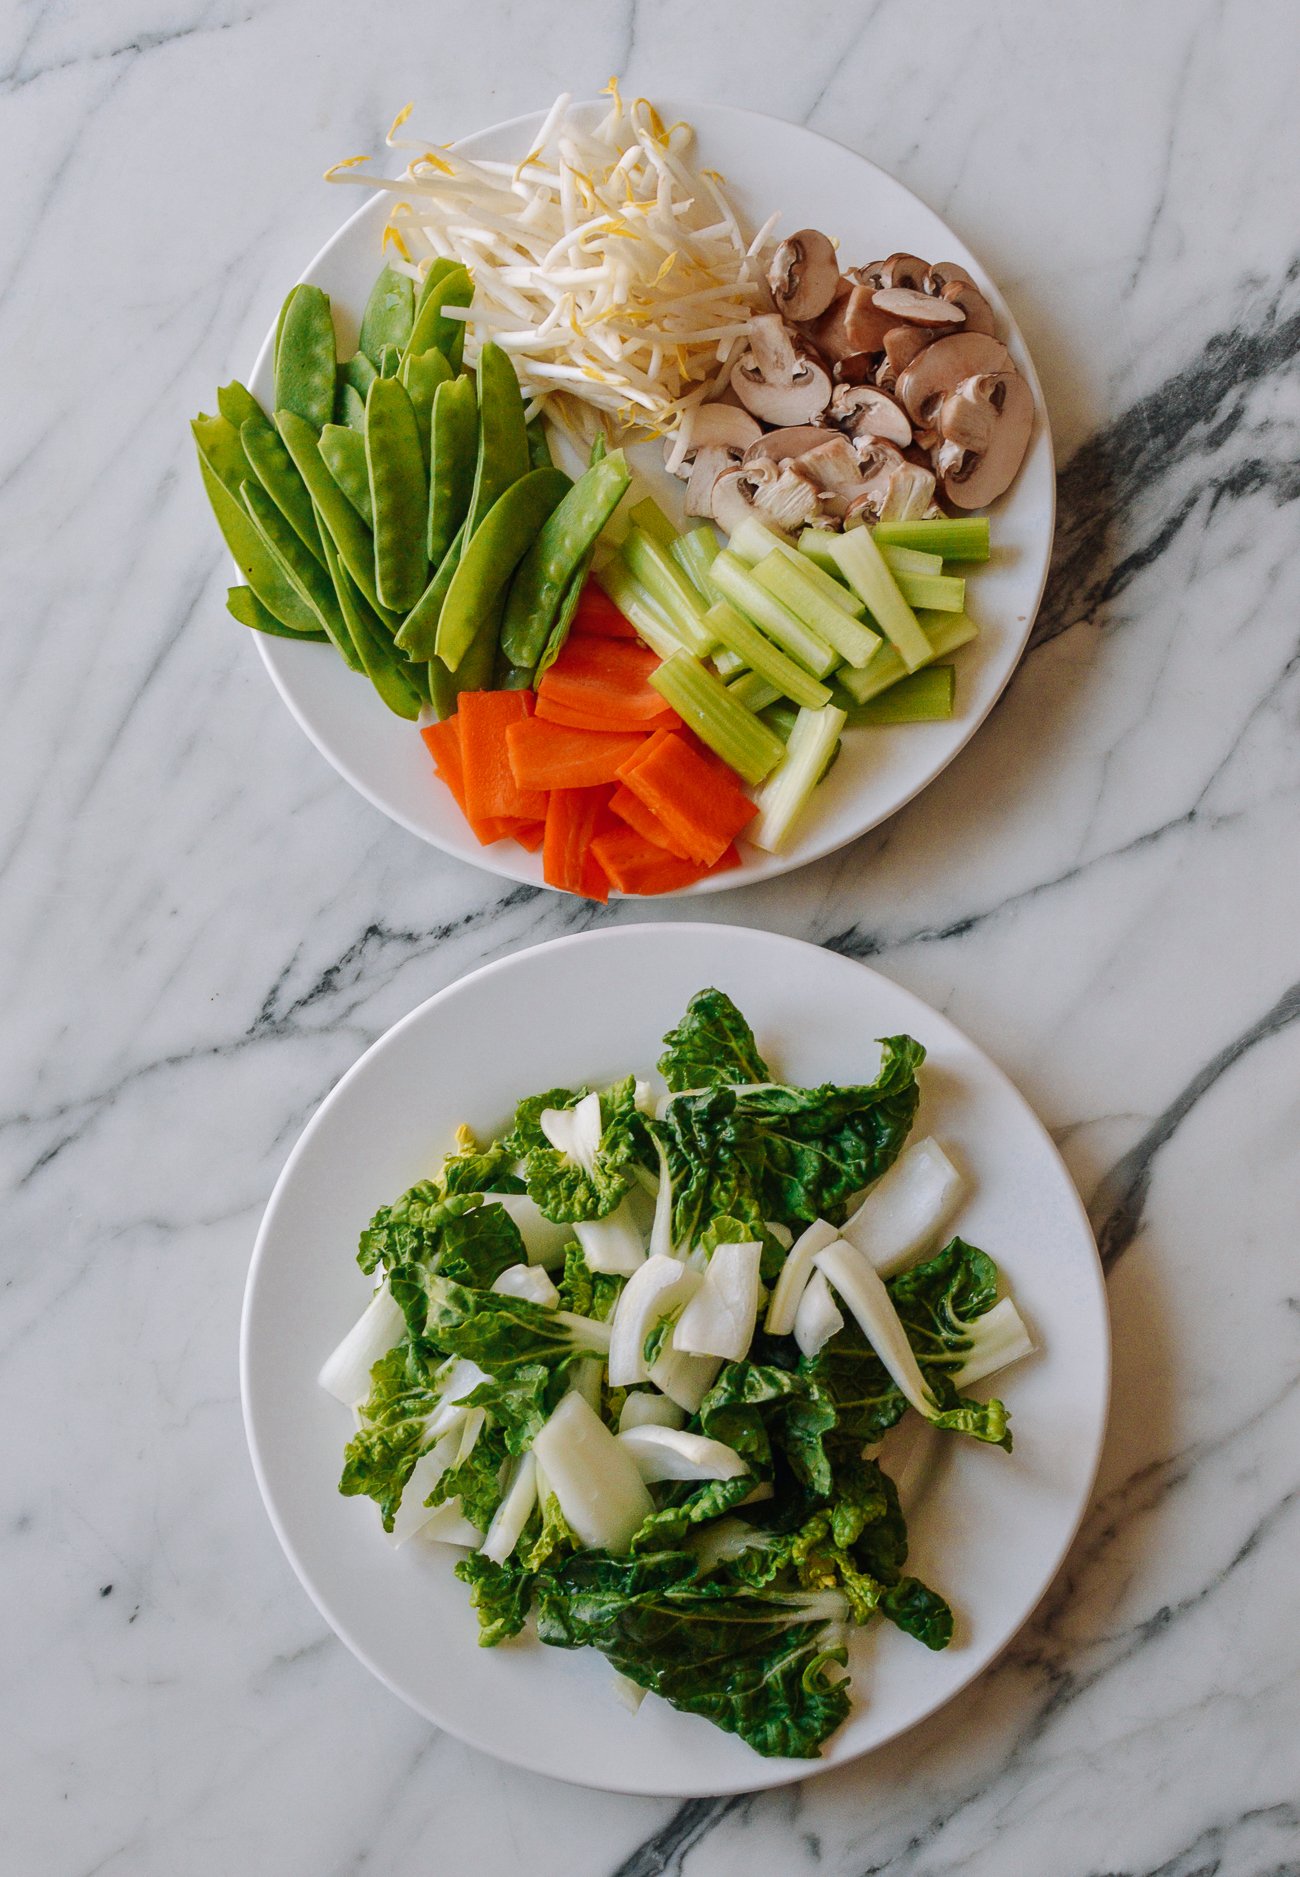 prepared vegetables for chop suey